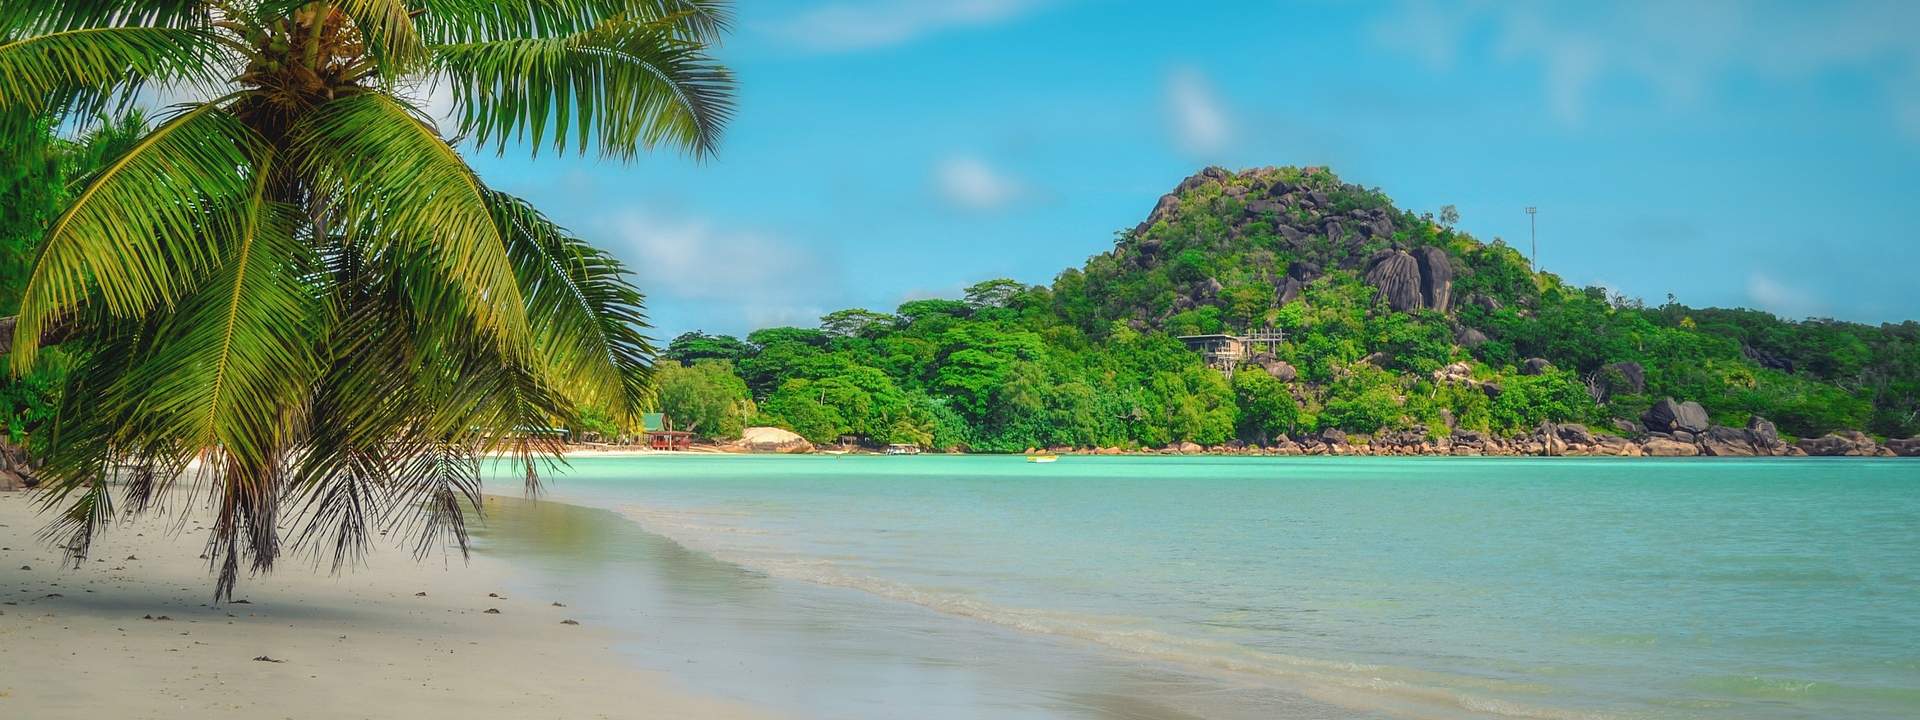 Katamarankreuzfahrt zu den drei Hauptinseln der Seychellen